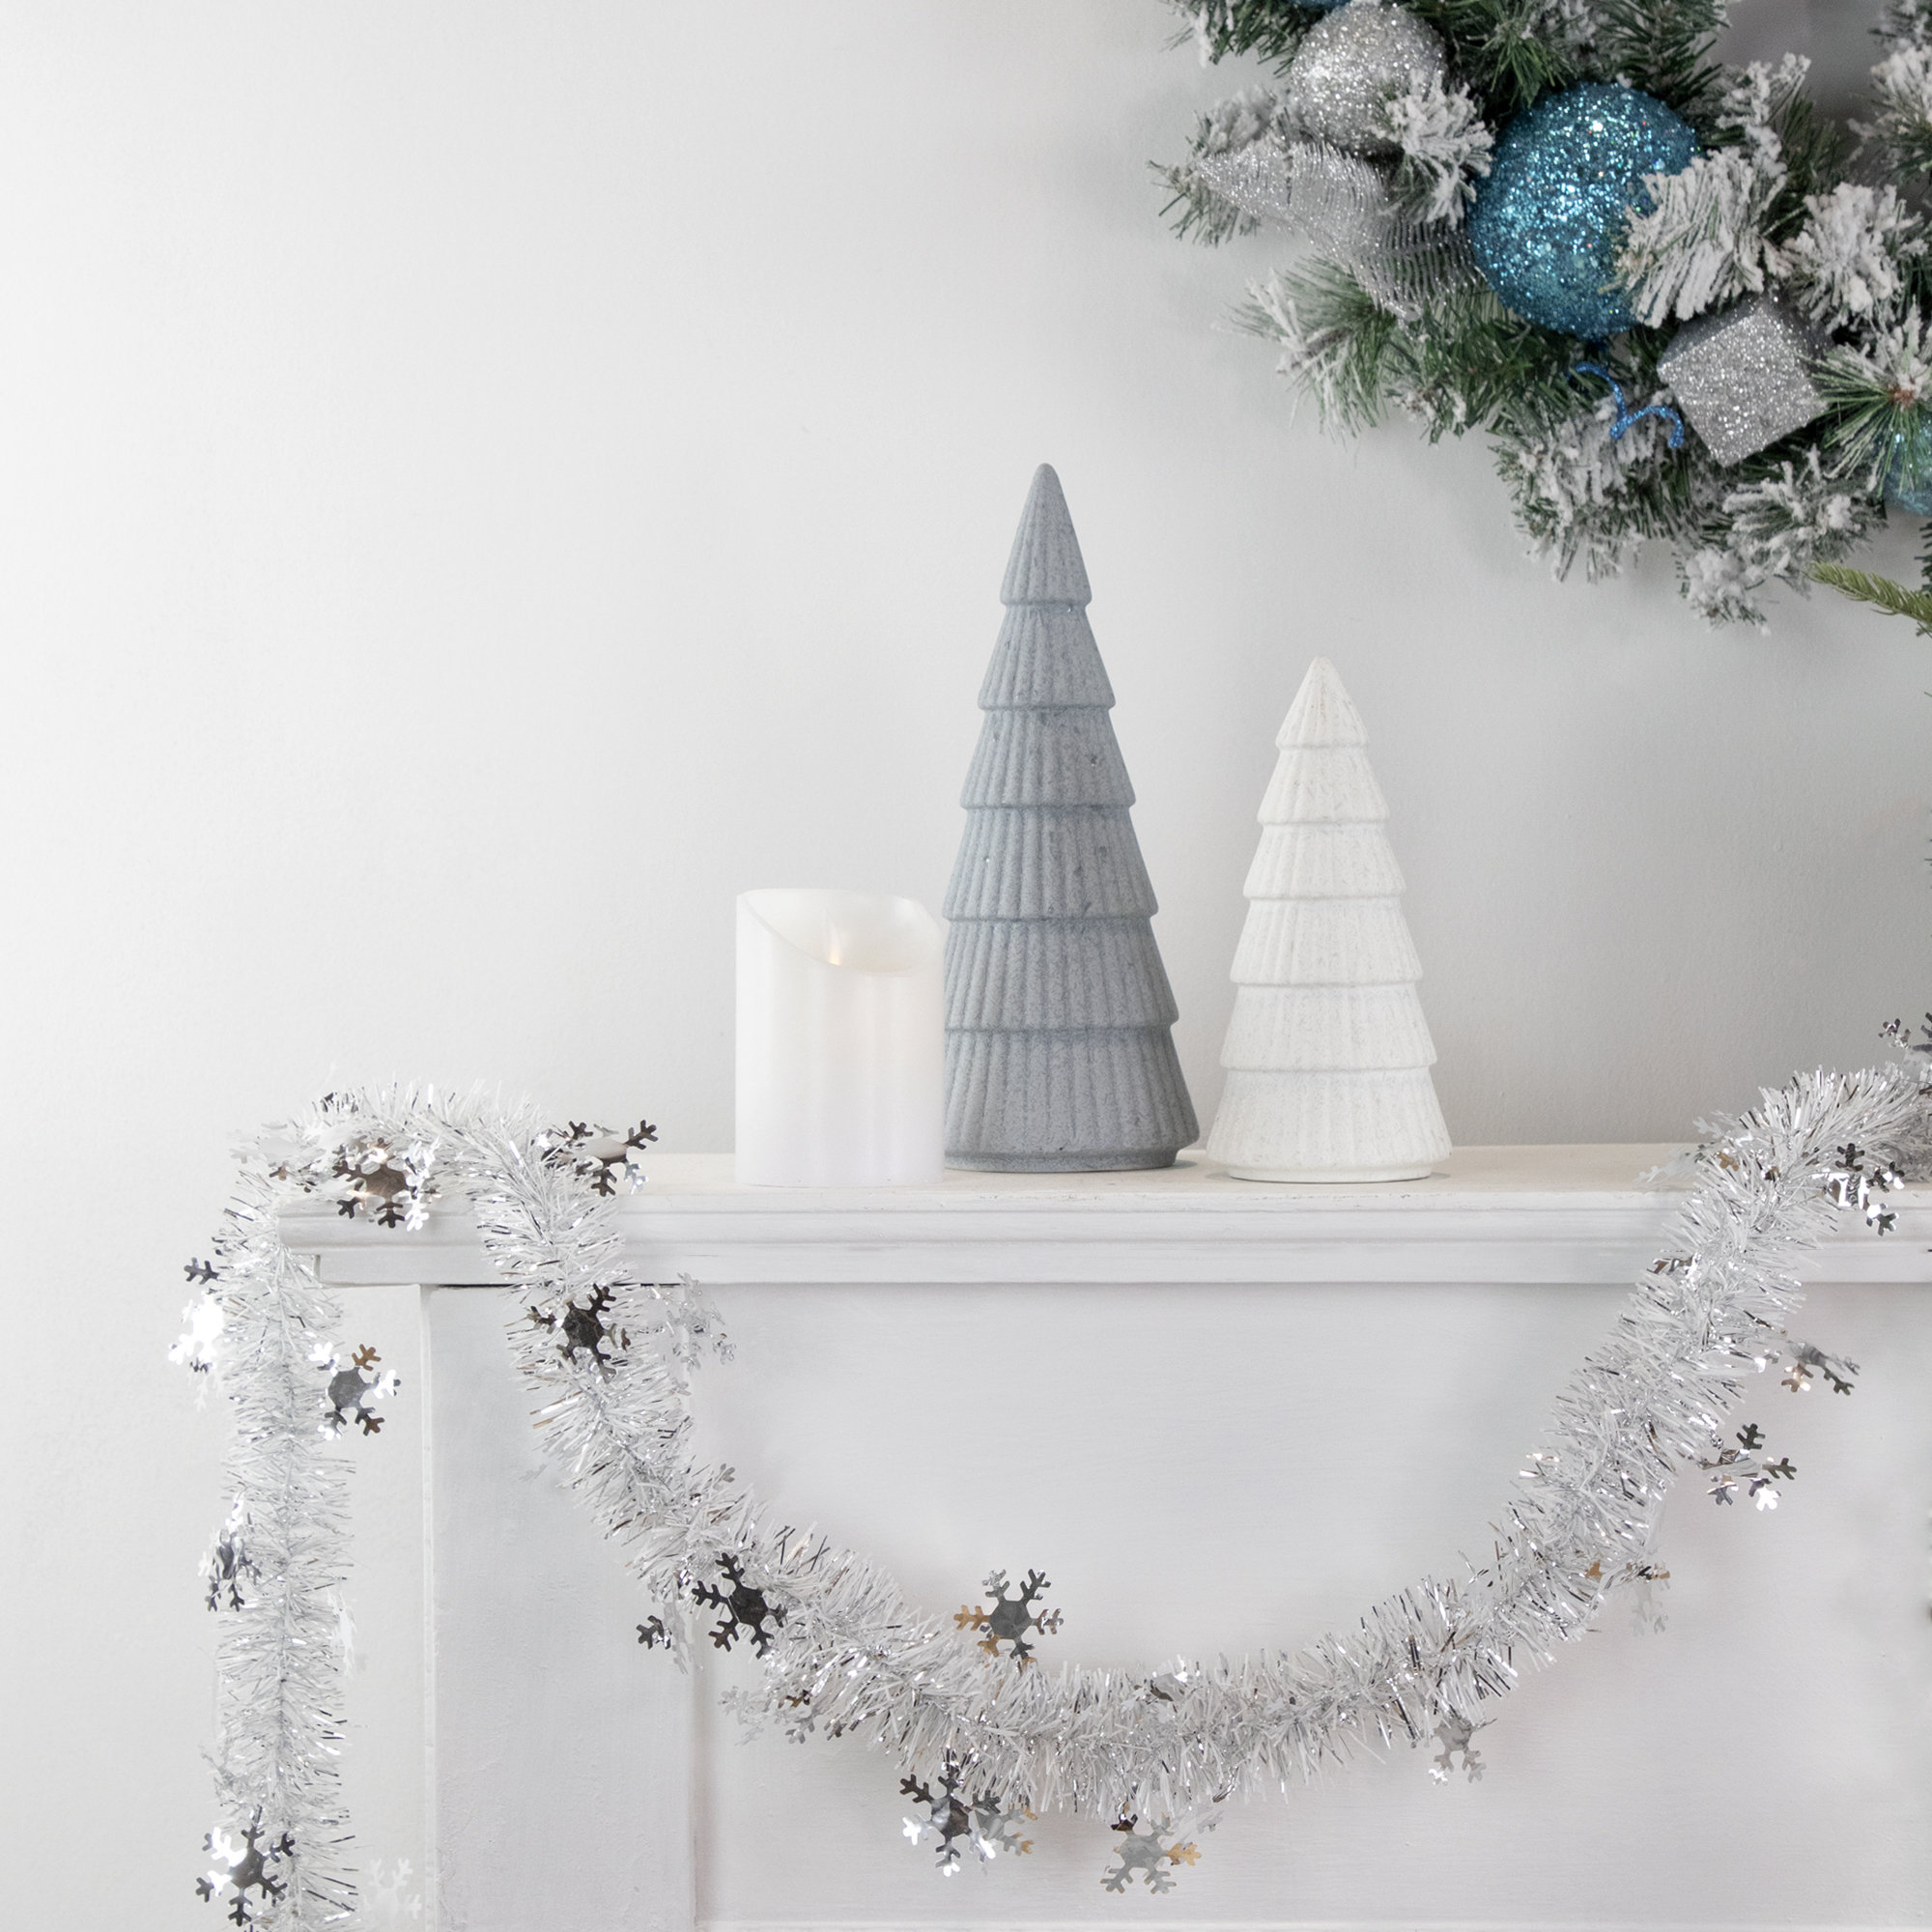 MINI CHRISTMAS TREE 10 BLUE TINSEL LED LIGHTS GLITTER SNOWFLAKE